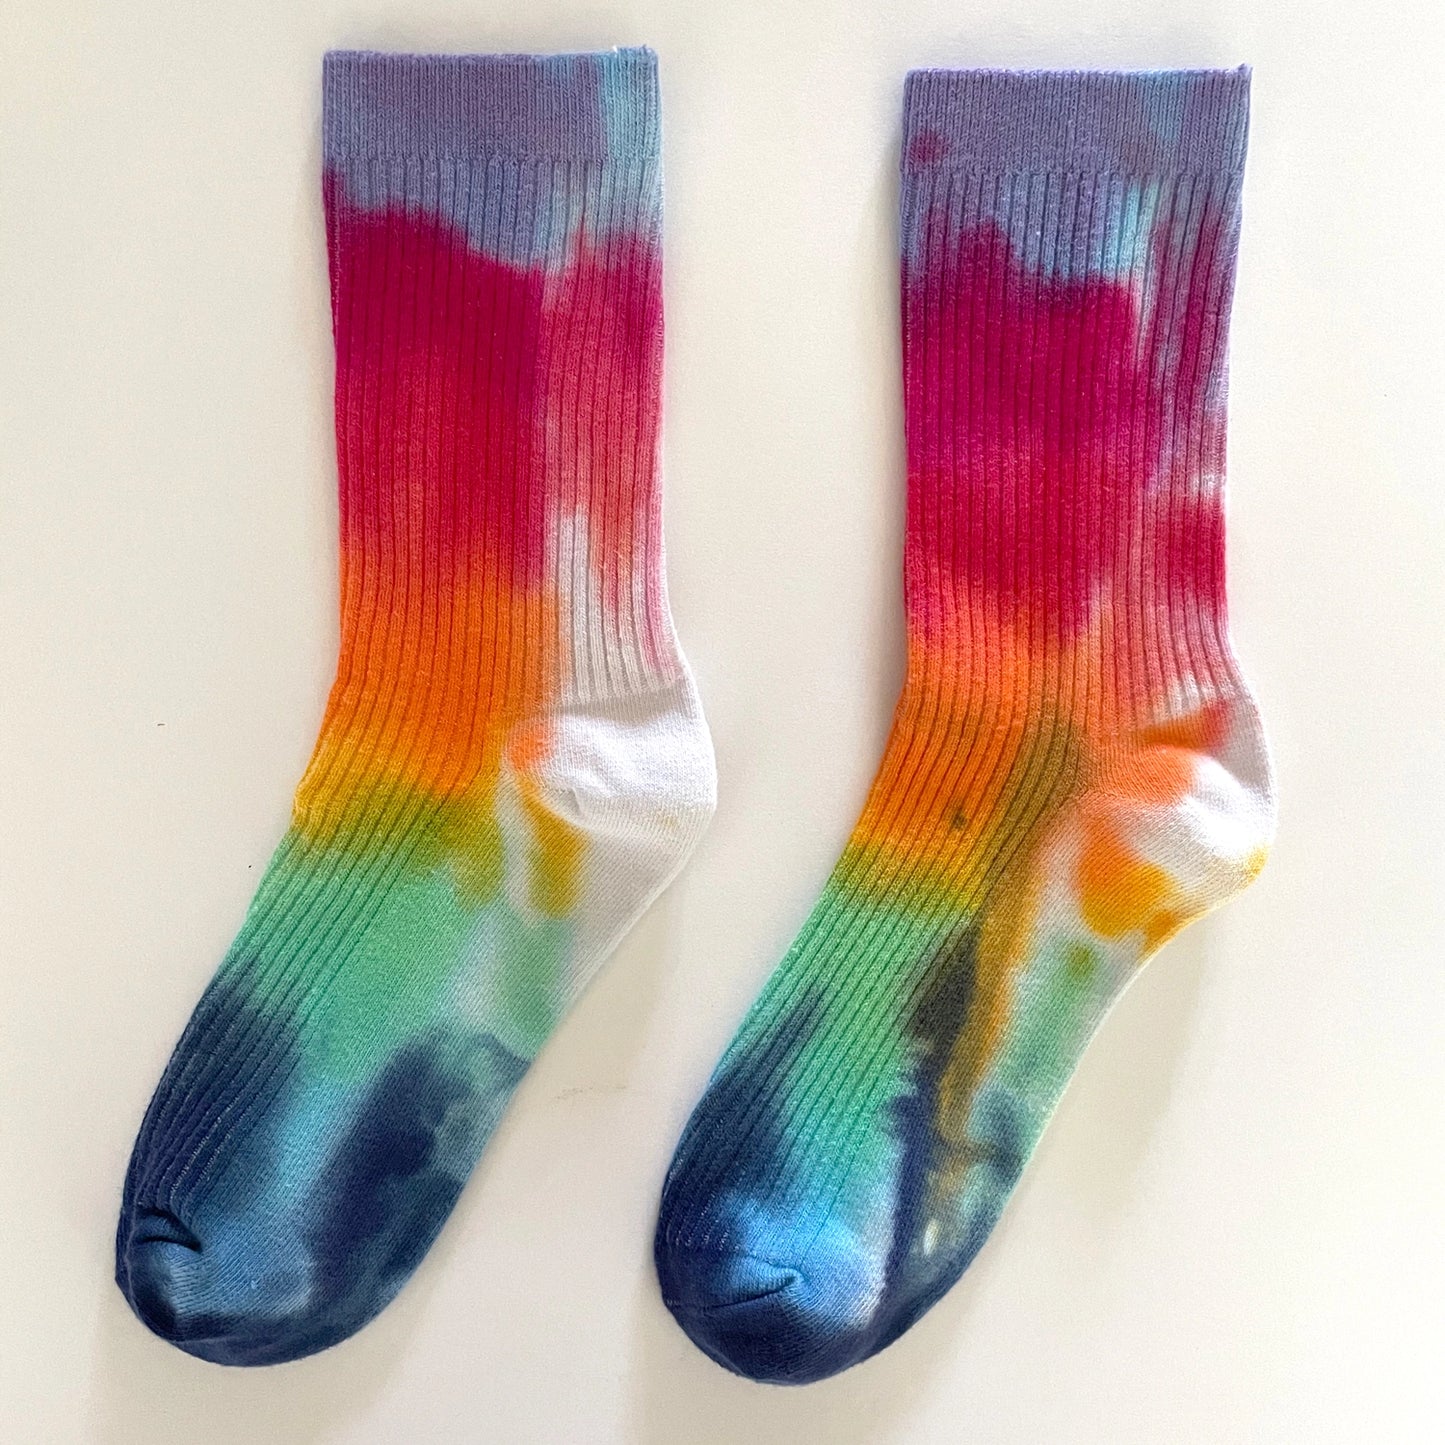 Merle Works - Rainbow Hand-dyed Dressy Socks (Men’s)